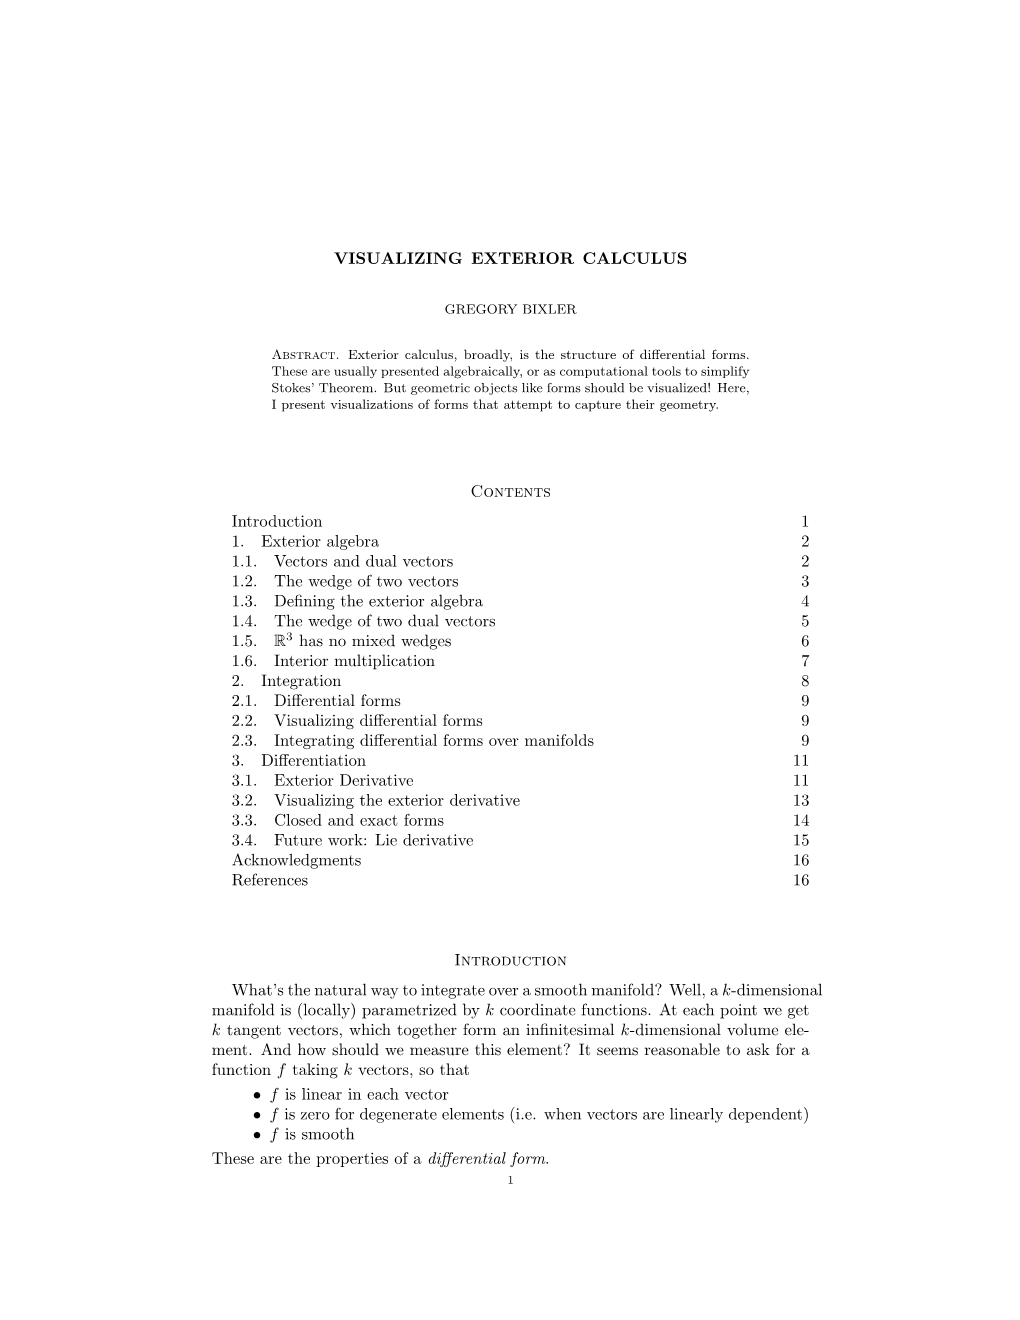 VISUALIZING EXTERIOR CALCULUS Contents Introduction 1 1. Exterior